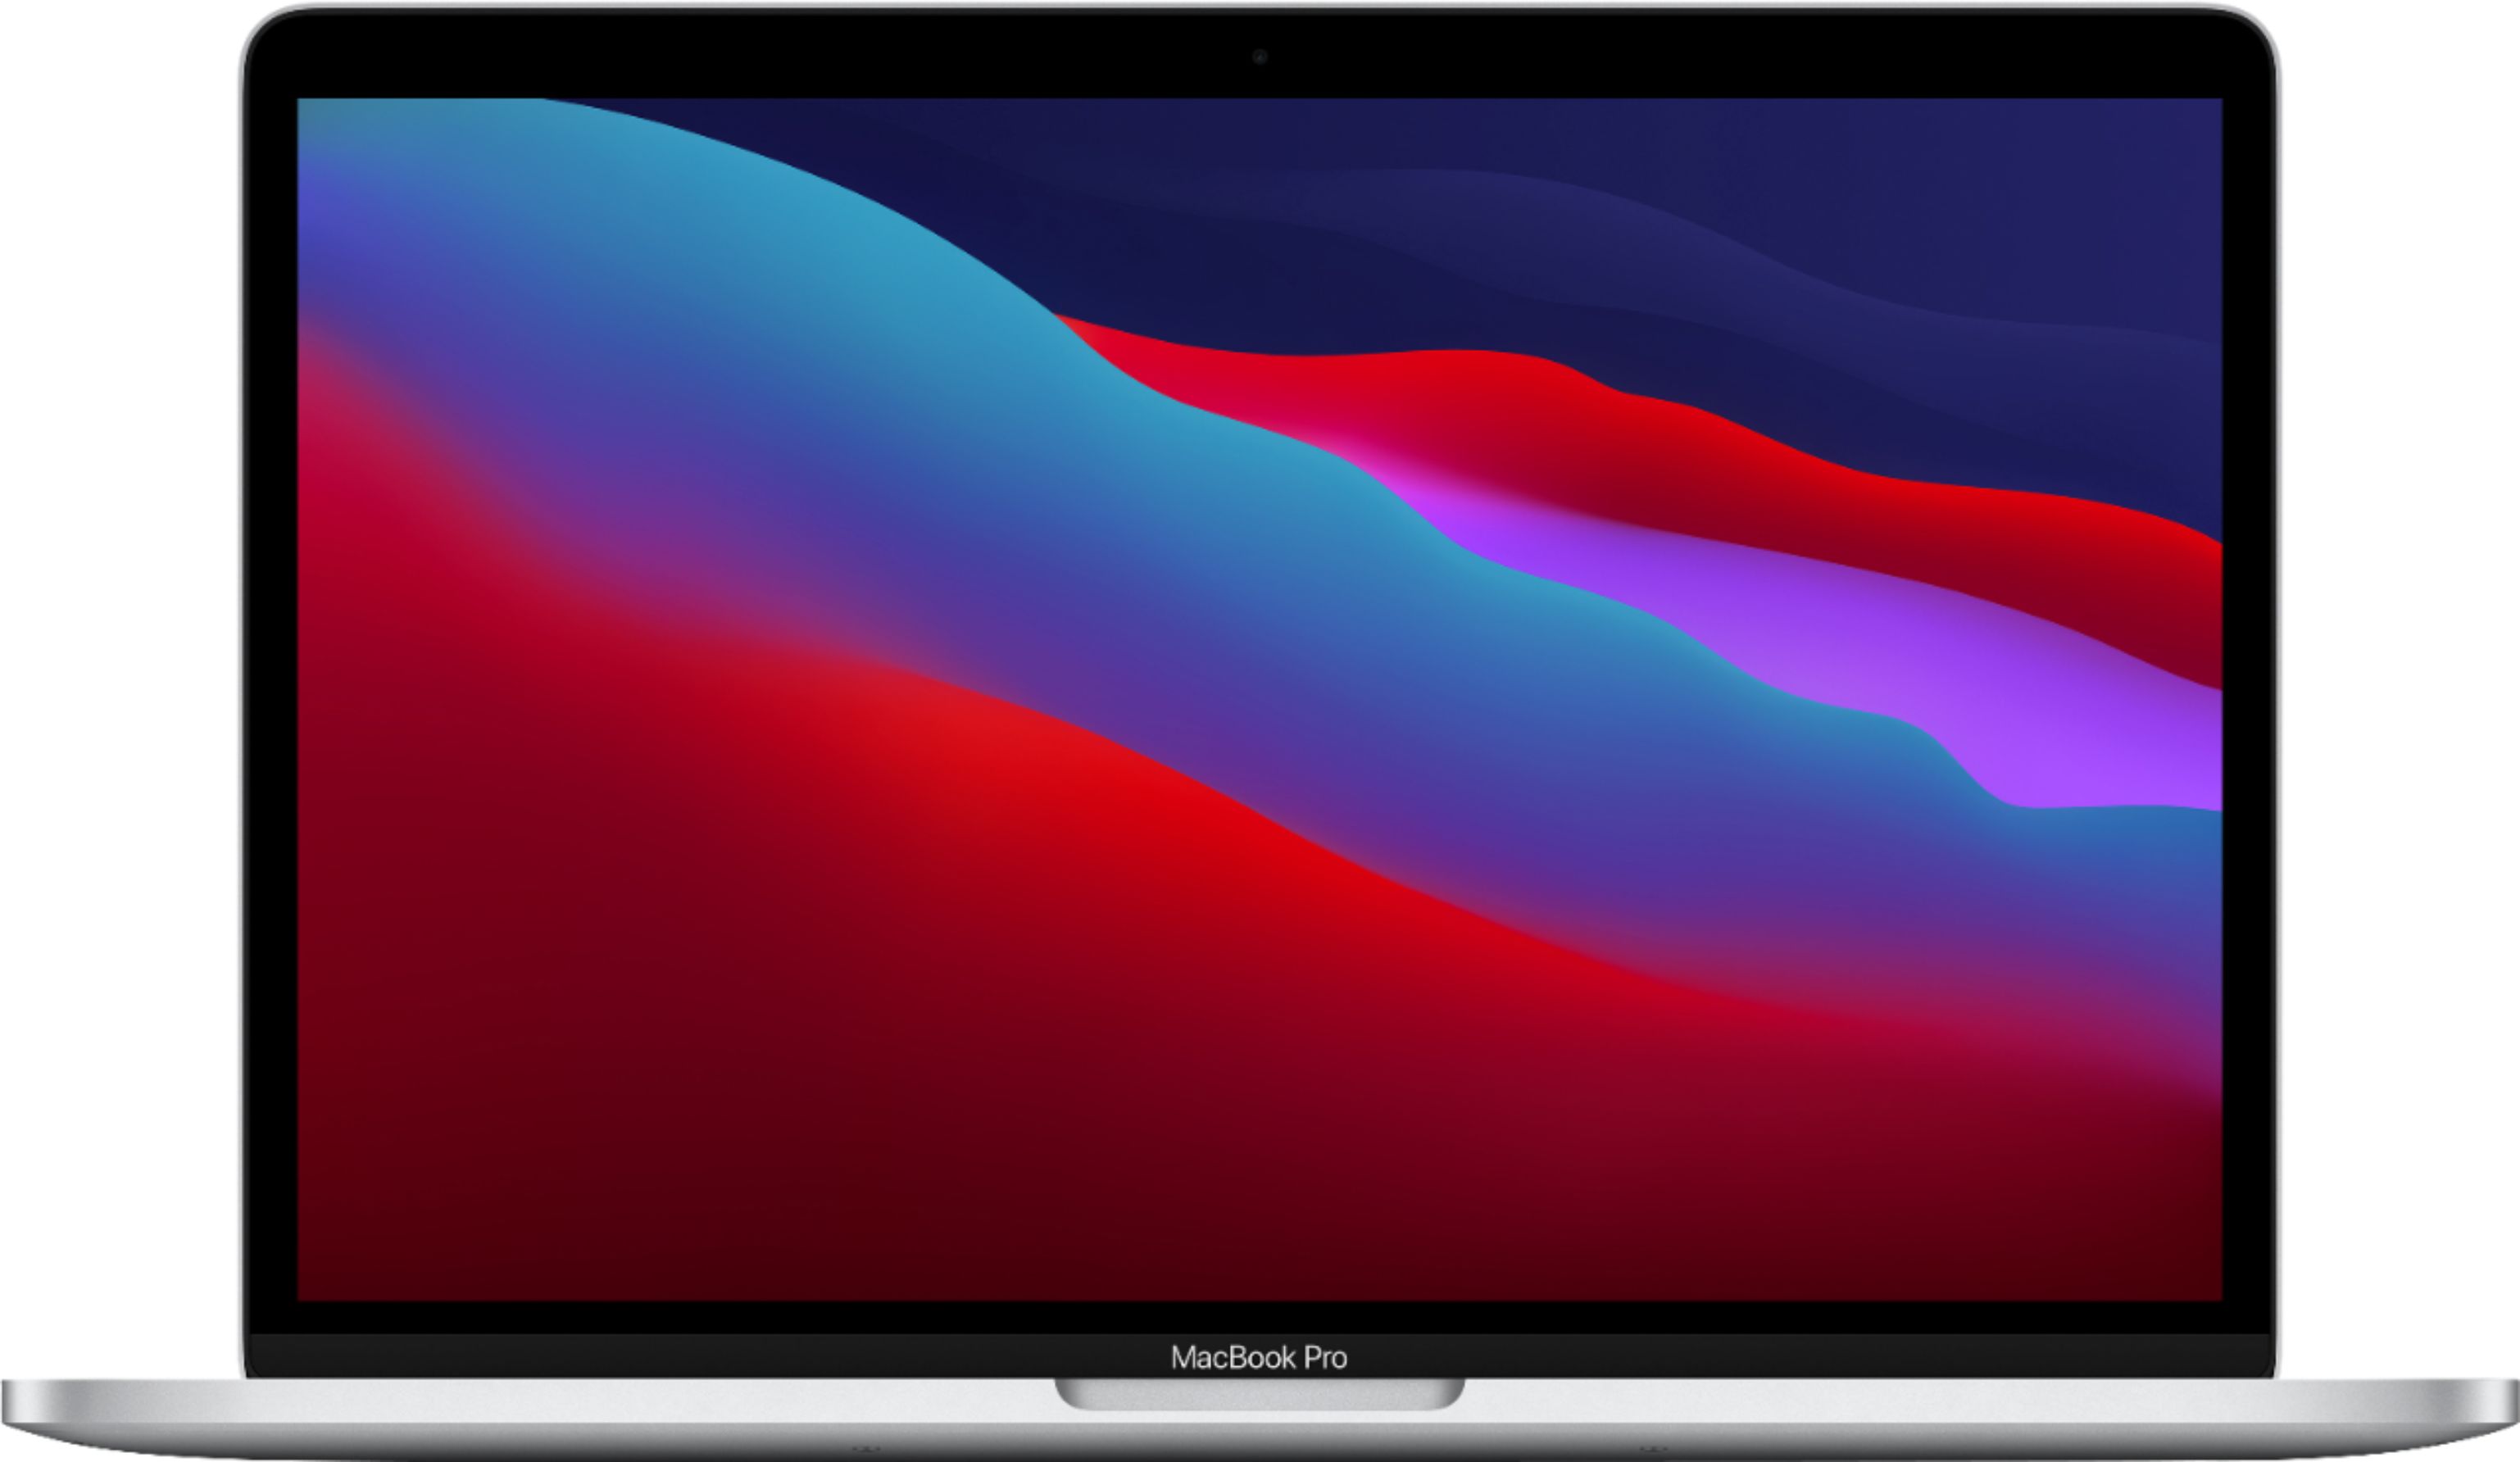 MacBook Pro 13.3" Laptop: Apple M1 Chip, 8GB Memory, 256GB SSD $950 + Free Shipping